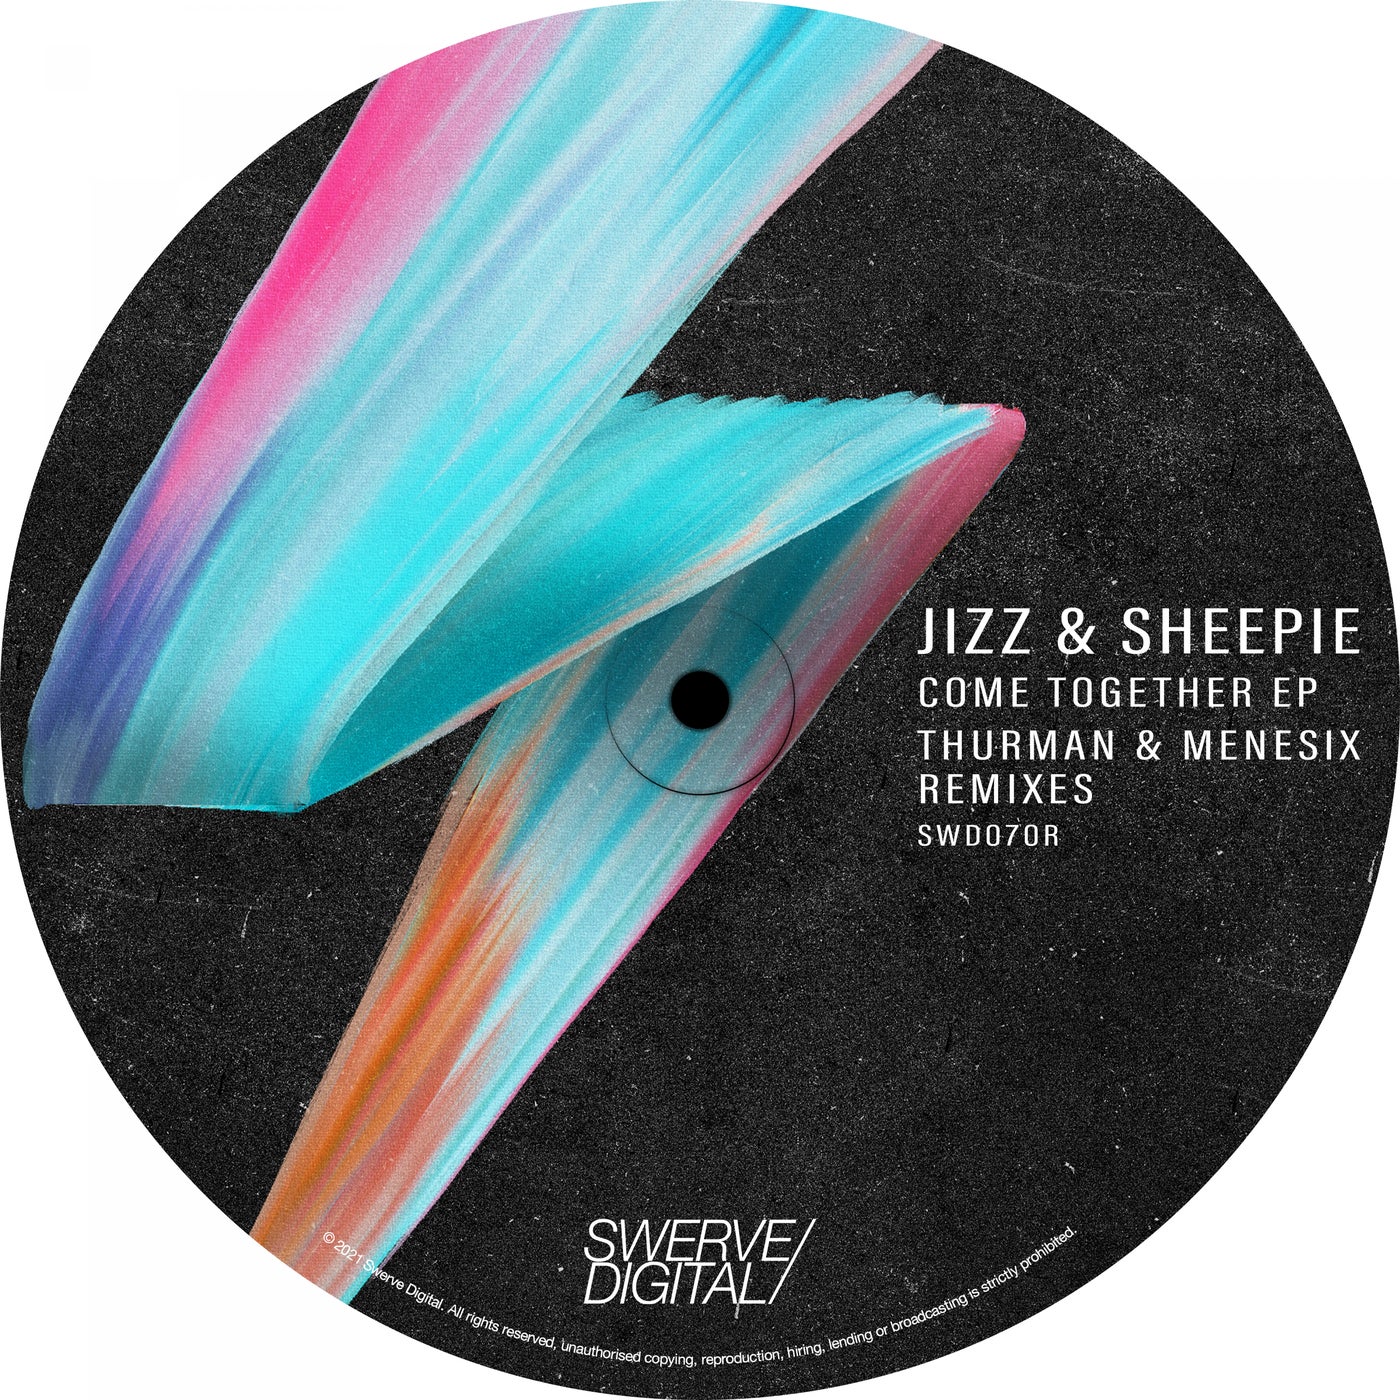 Jizz, Sheepie – Come Together (Thurman & Menesix Remixes) [SWD070R]